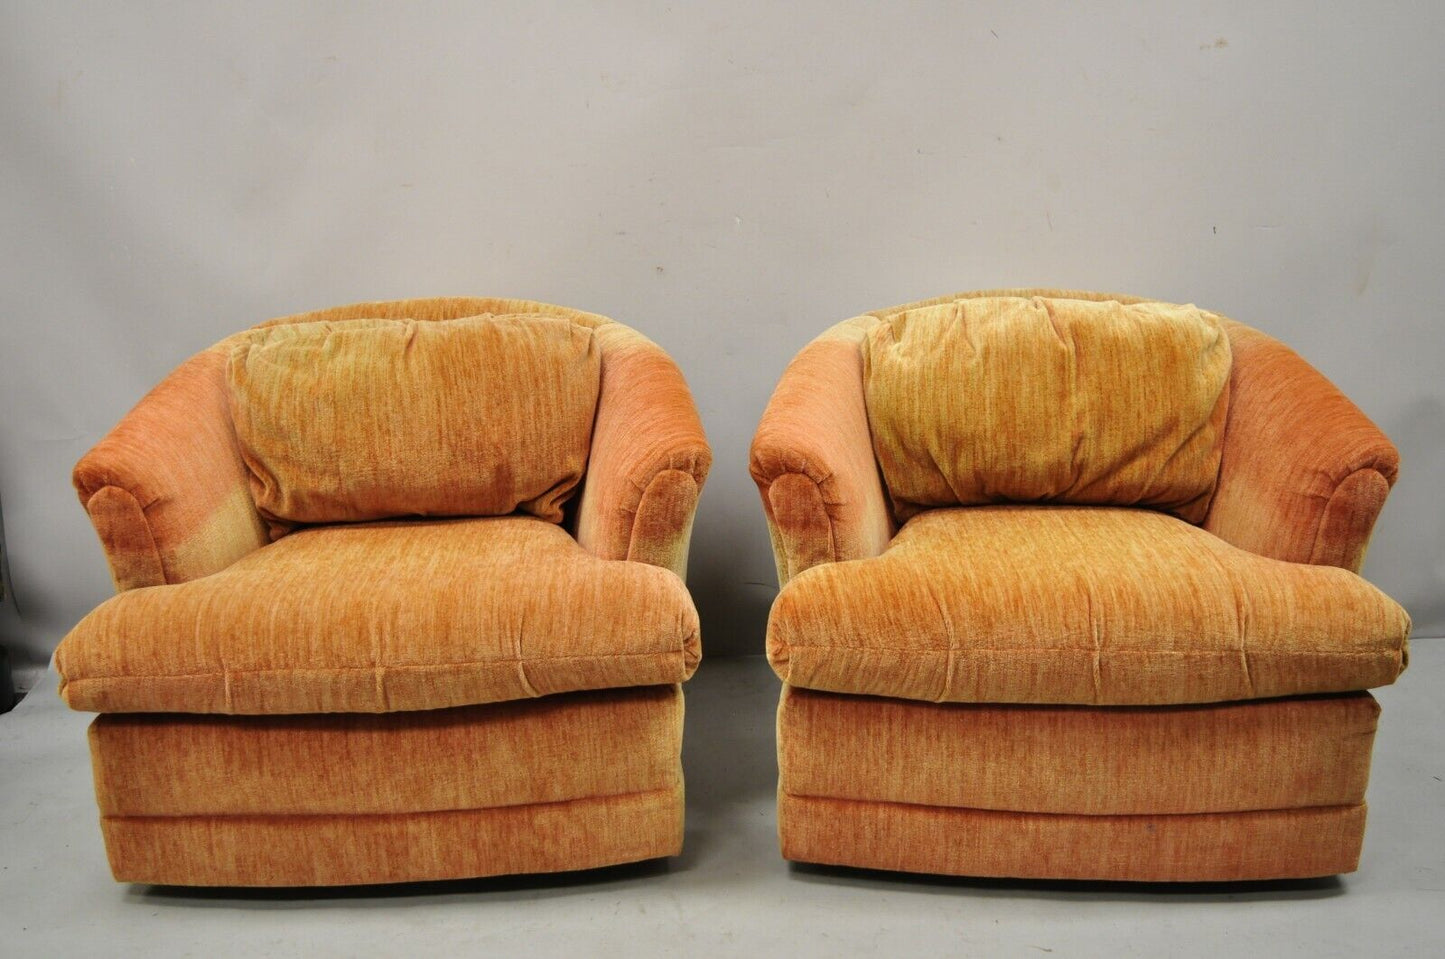 Flexsteel Mid Century Orange Upholstered Swivel Lounge Club Chairs - a Pair